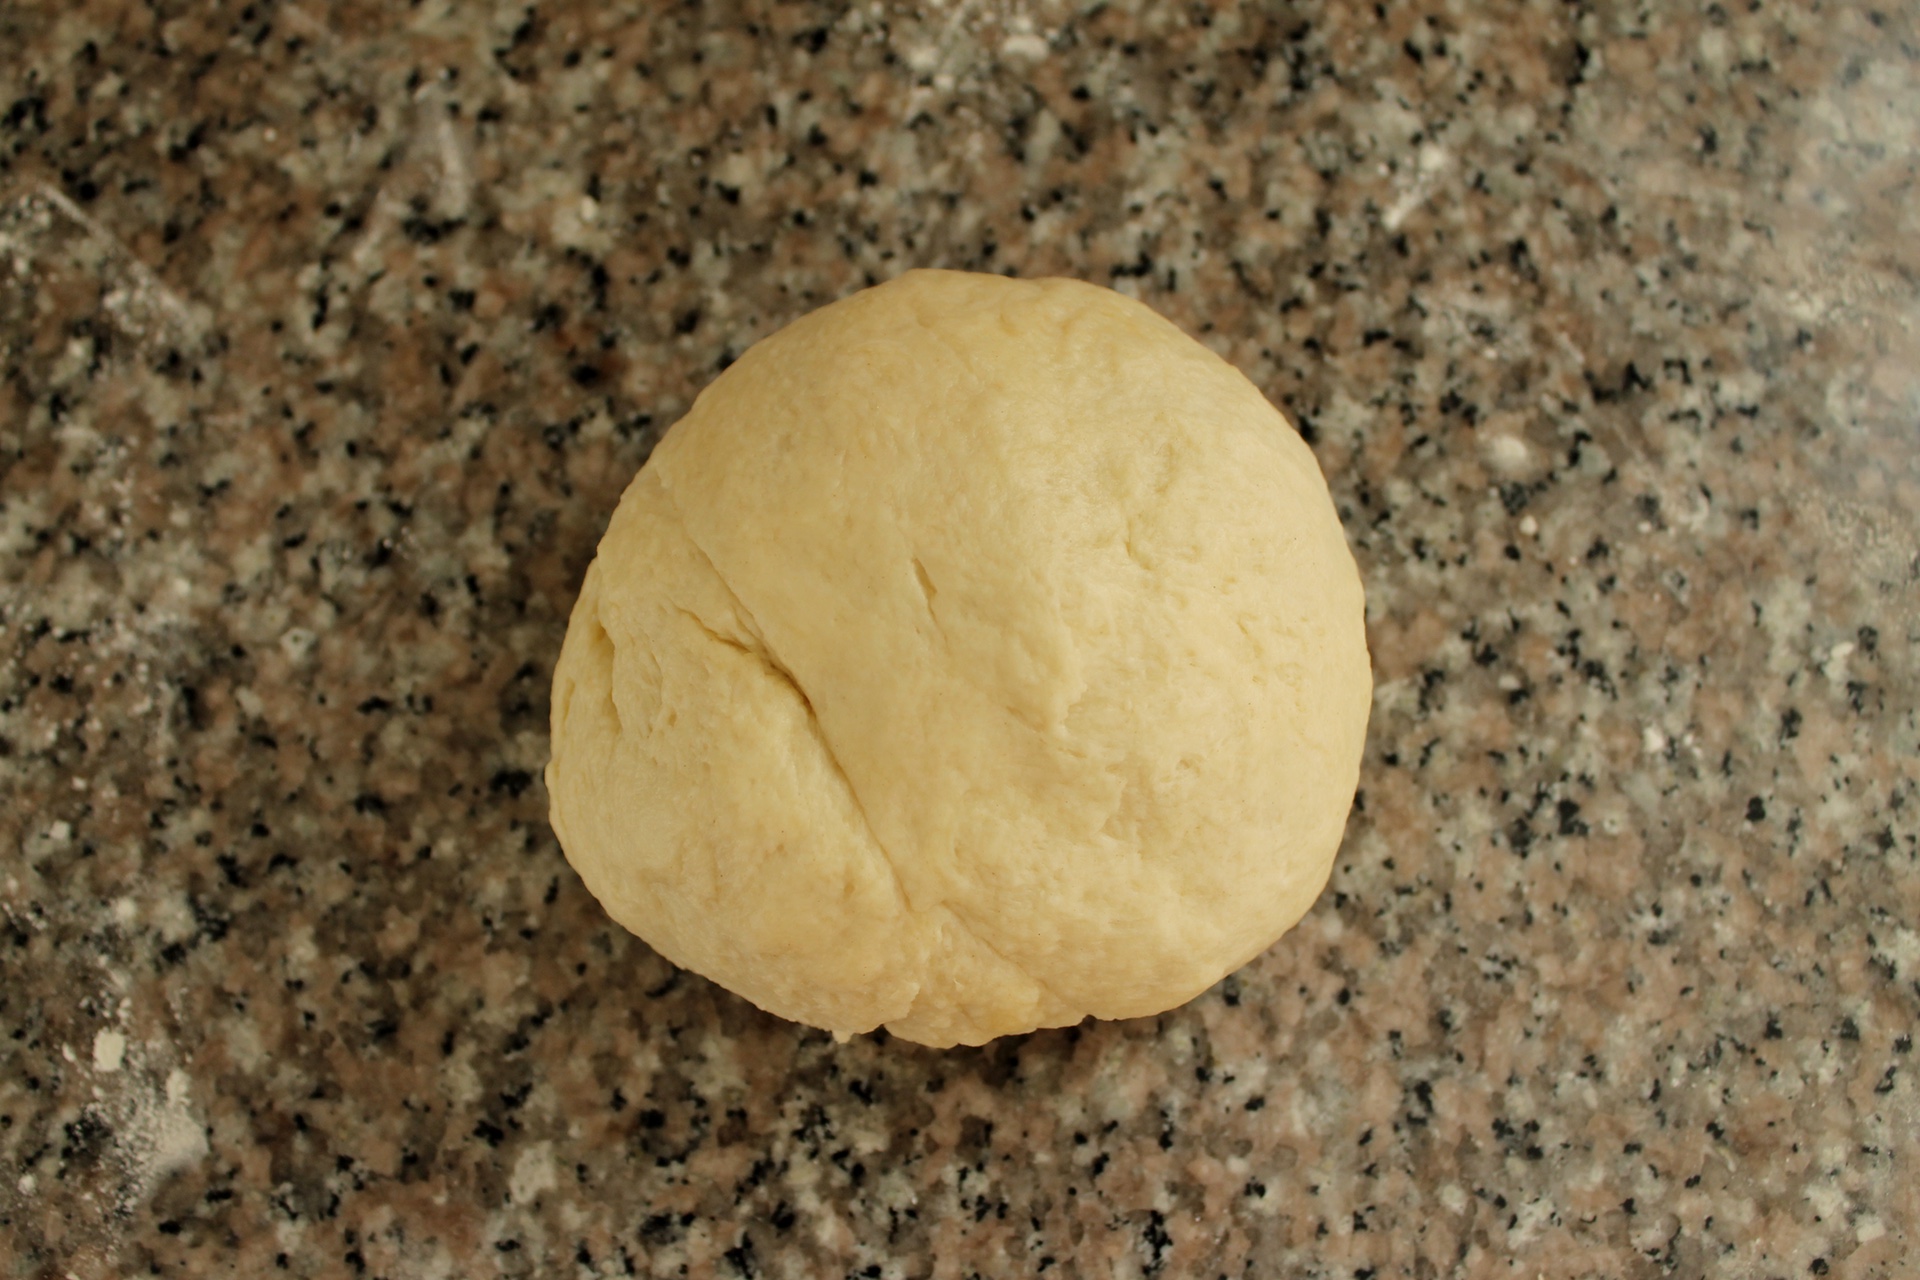  Tortilla dough after kneading.